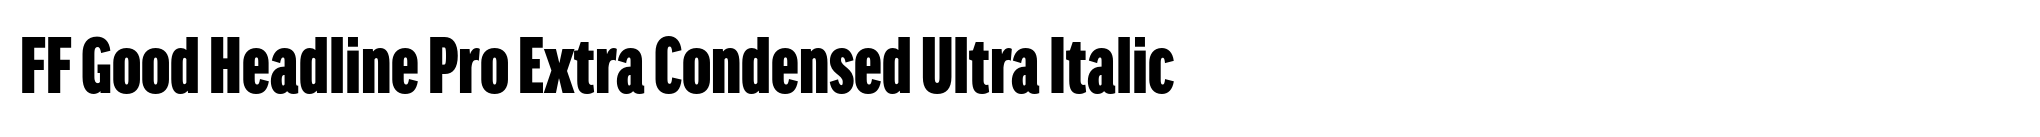 FF Good Headline Pro Extra Condensed Ultra Italic image